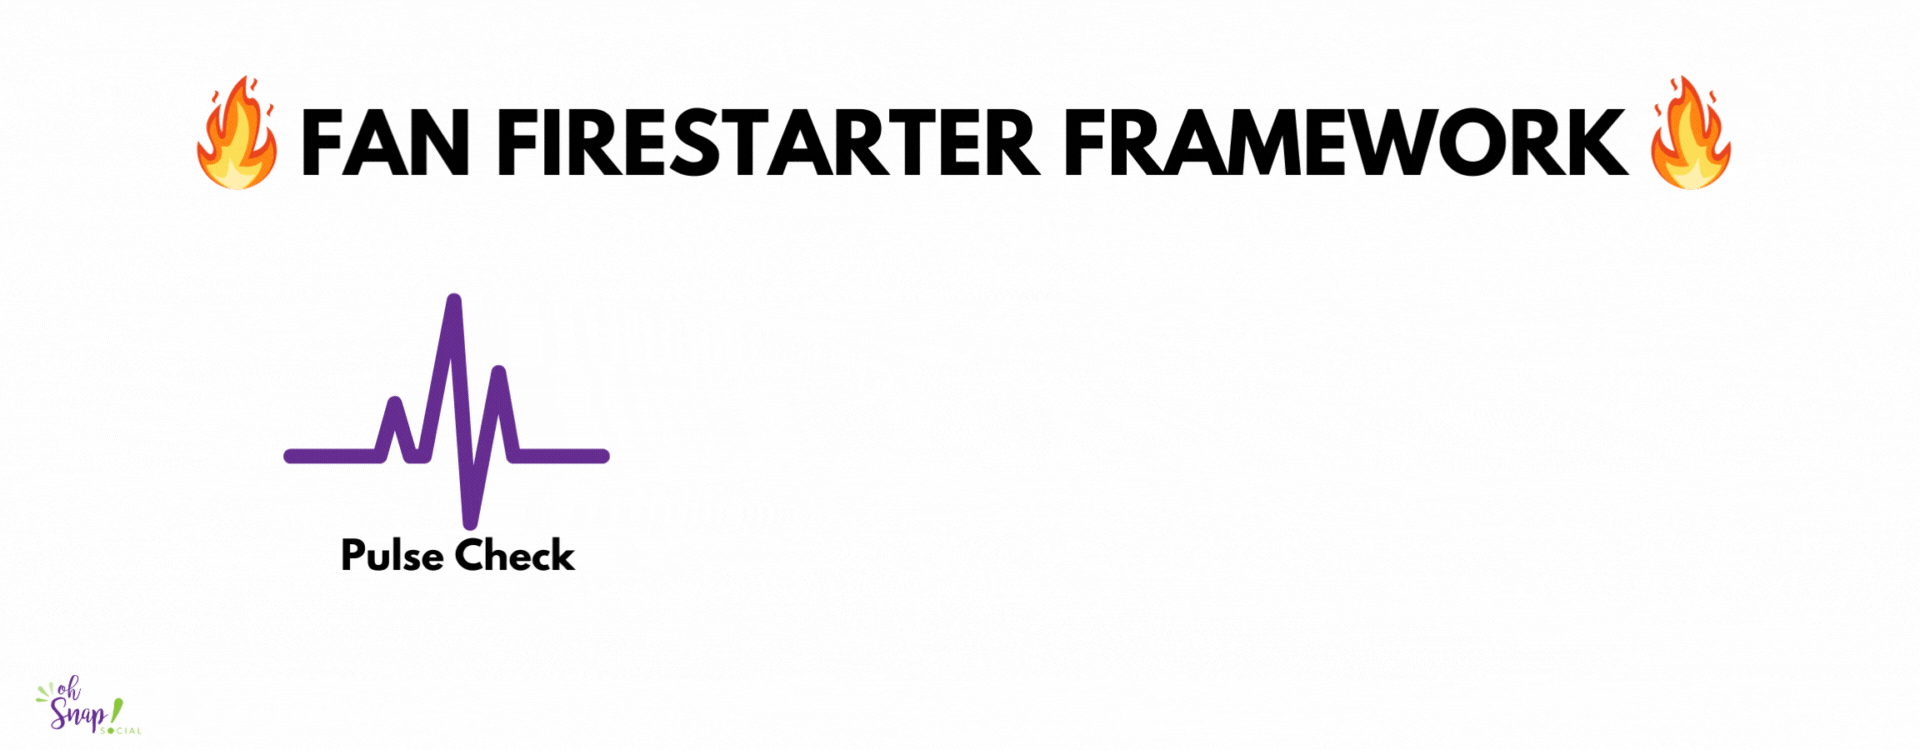 Fan Firestarter Framework - Oh Snap Social